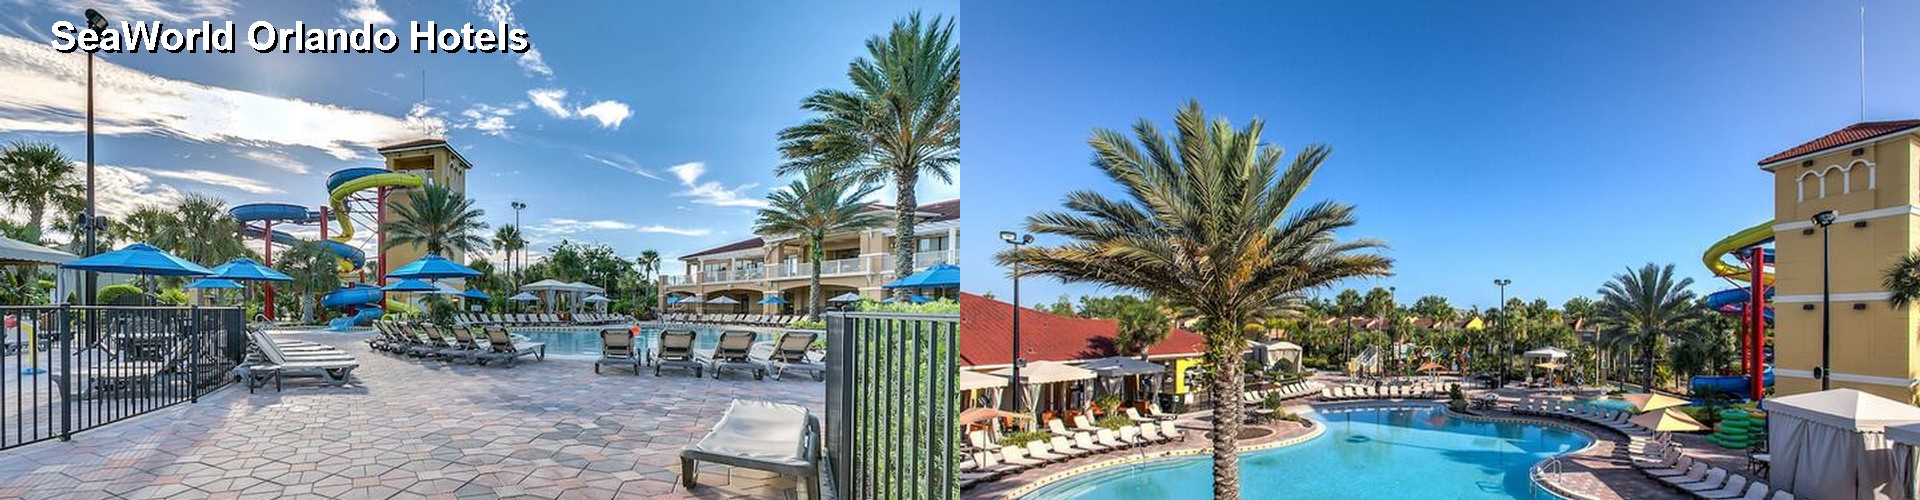 5 Best Hotels near SeaWorld Orlando